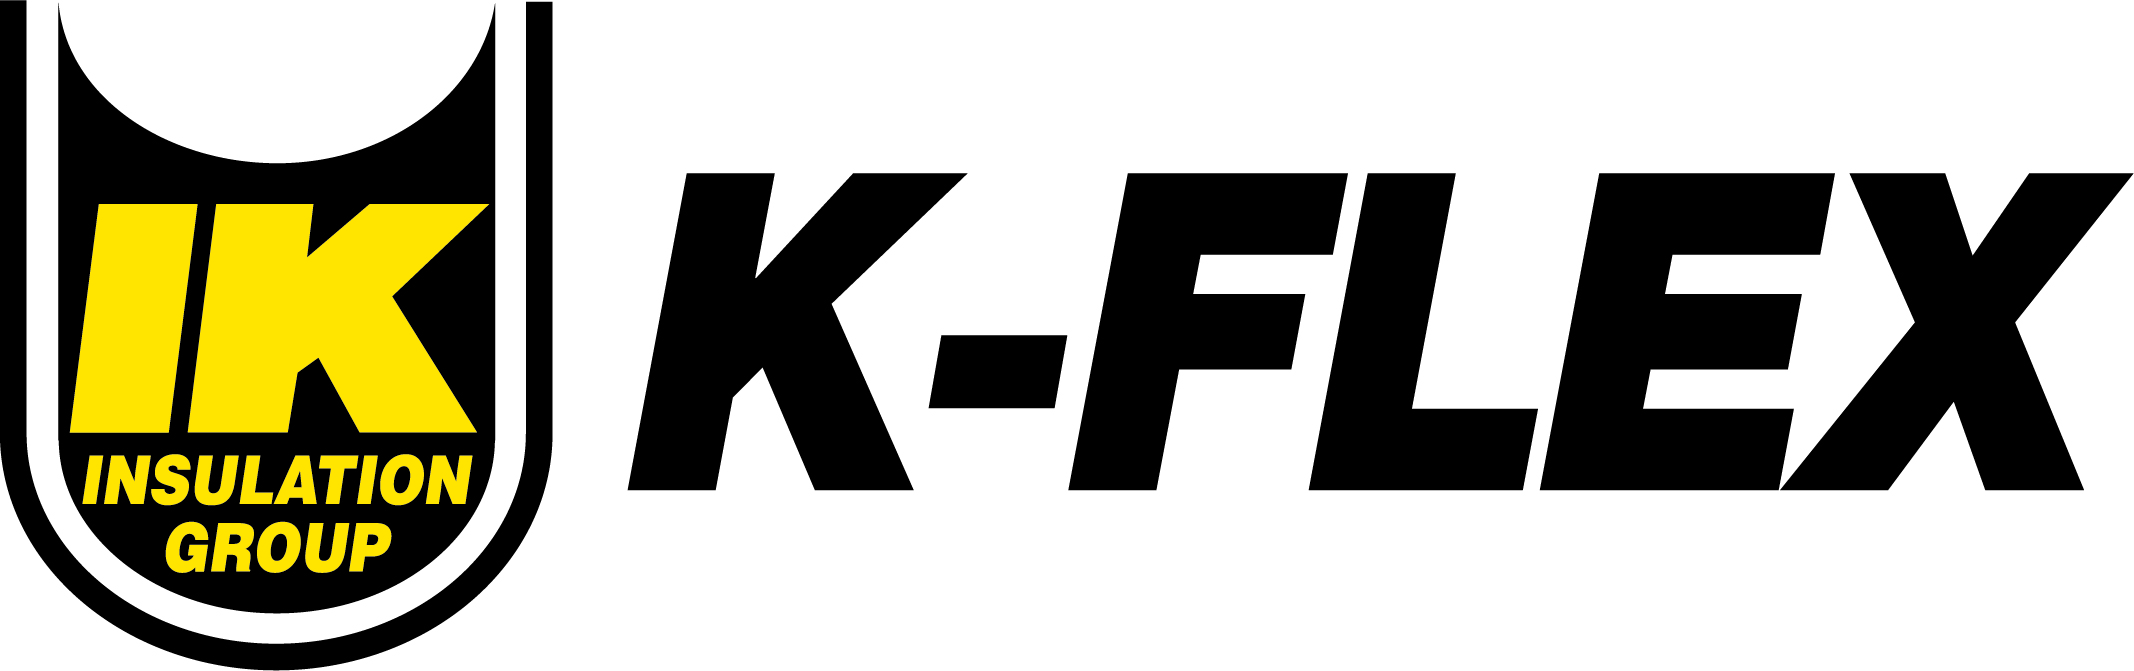 Flex флекс. K-Flex logo. K Flex бренд. Flex лого. Теплоизоляция k-Flex.